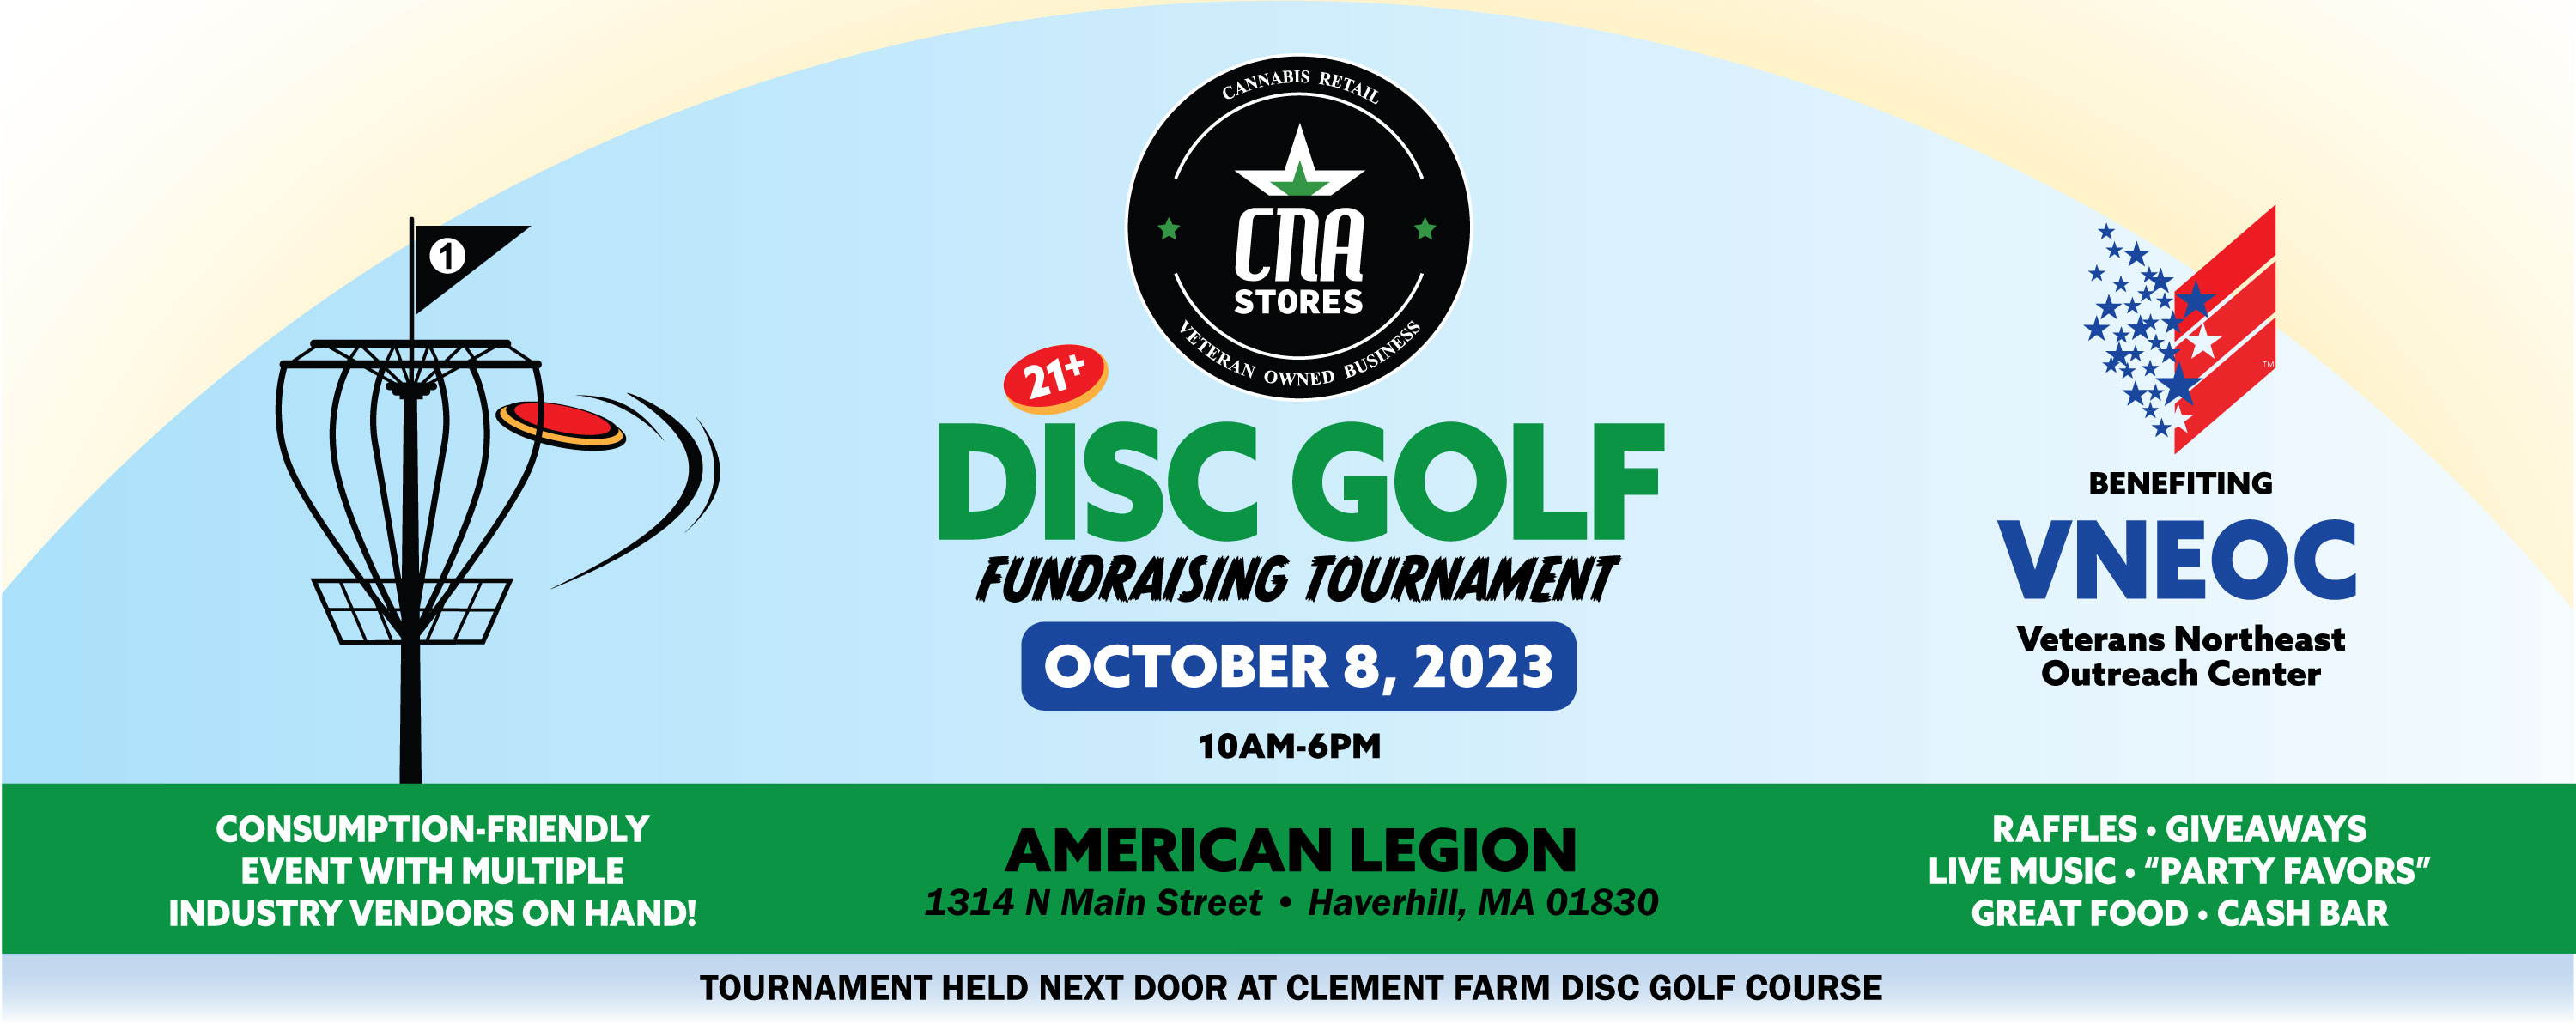 CNA Stores Cannabis Disc Golf Event for VNEOC